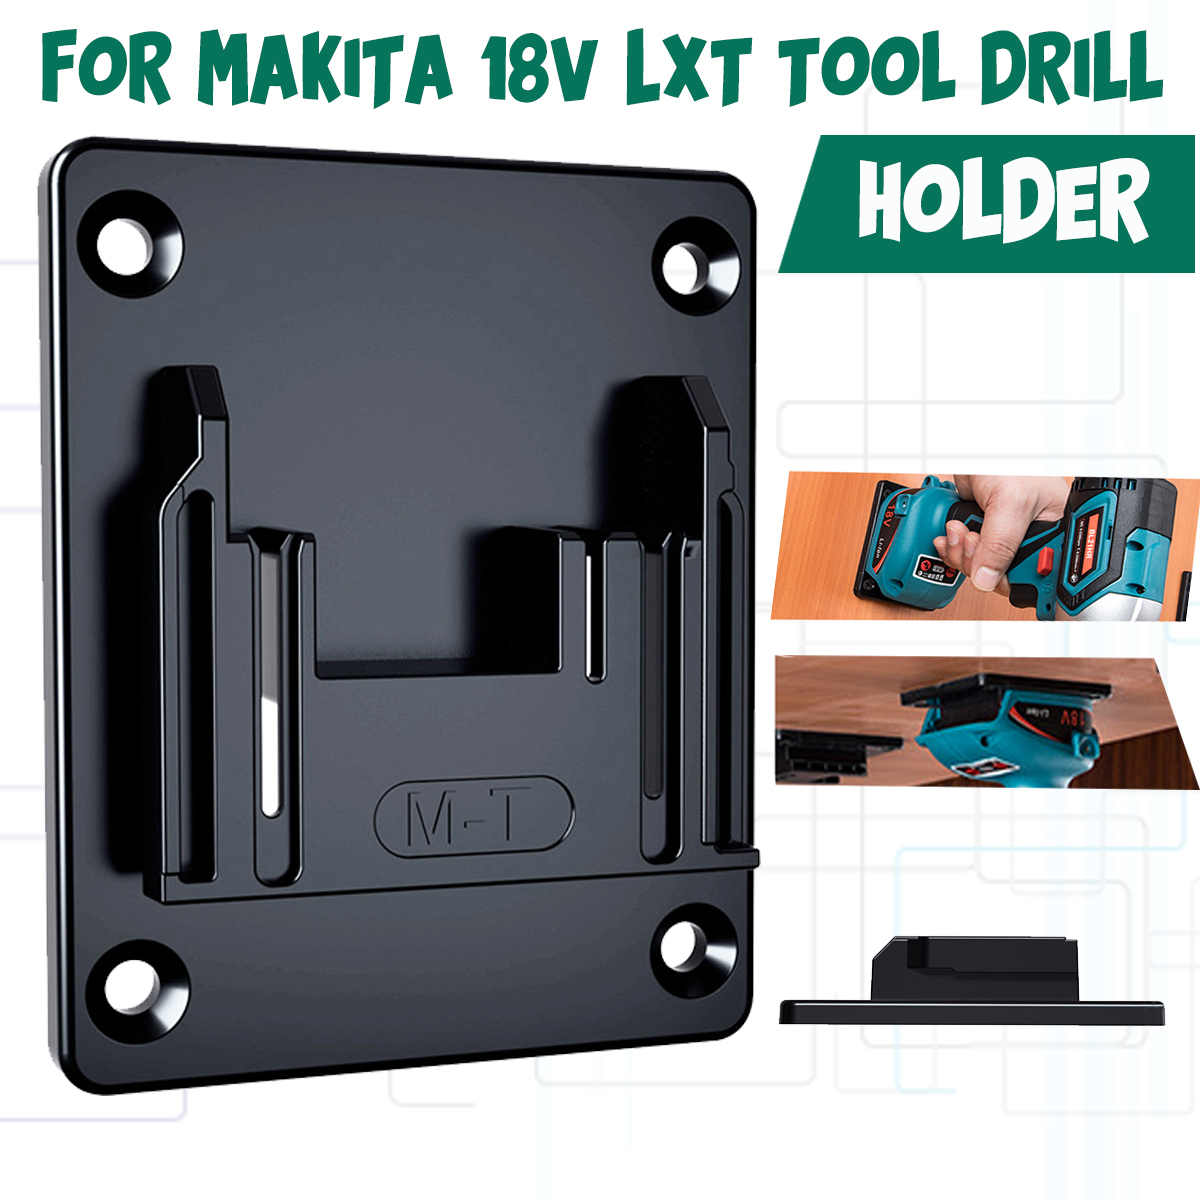 For-Makita-18V-LXT-Tool-Drill-Holder-Wall-Mount-Brackets-Hook-Storage-Rack-Van-1835476-1